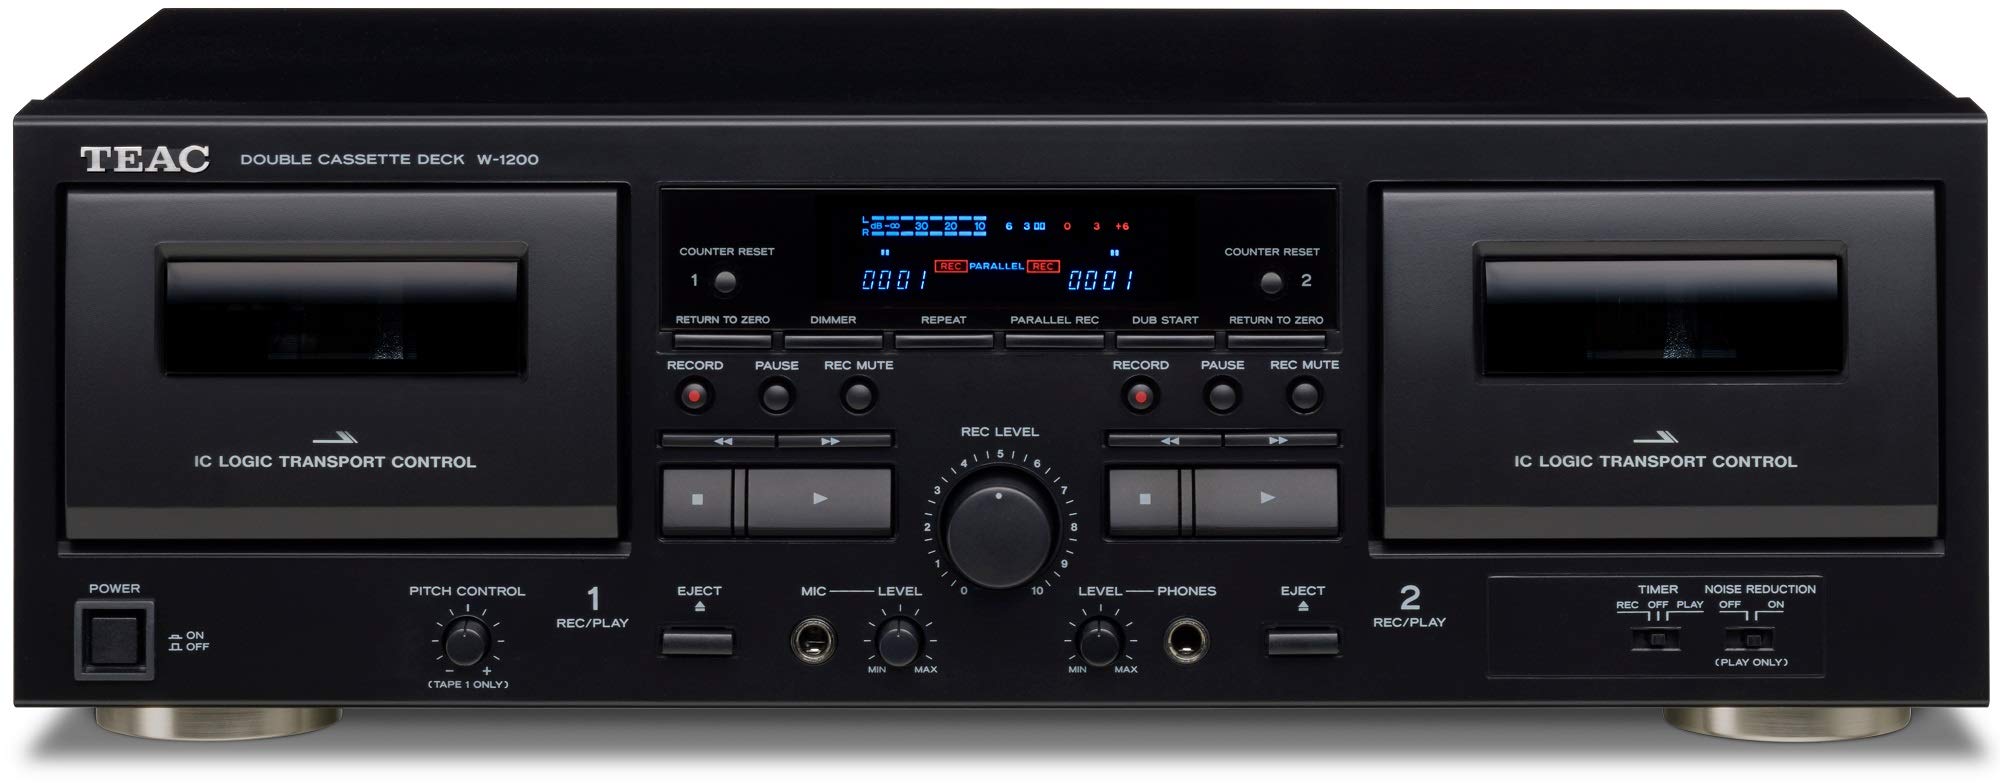 Teac W-1200 Doppelkassettendeck mit Recorder/USB/Pitch/Karaoke-Mikrofoneingang und Fernbedienung